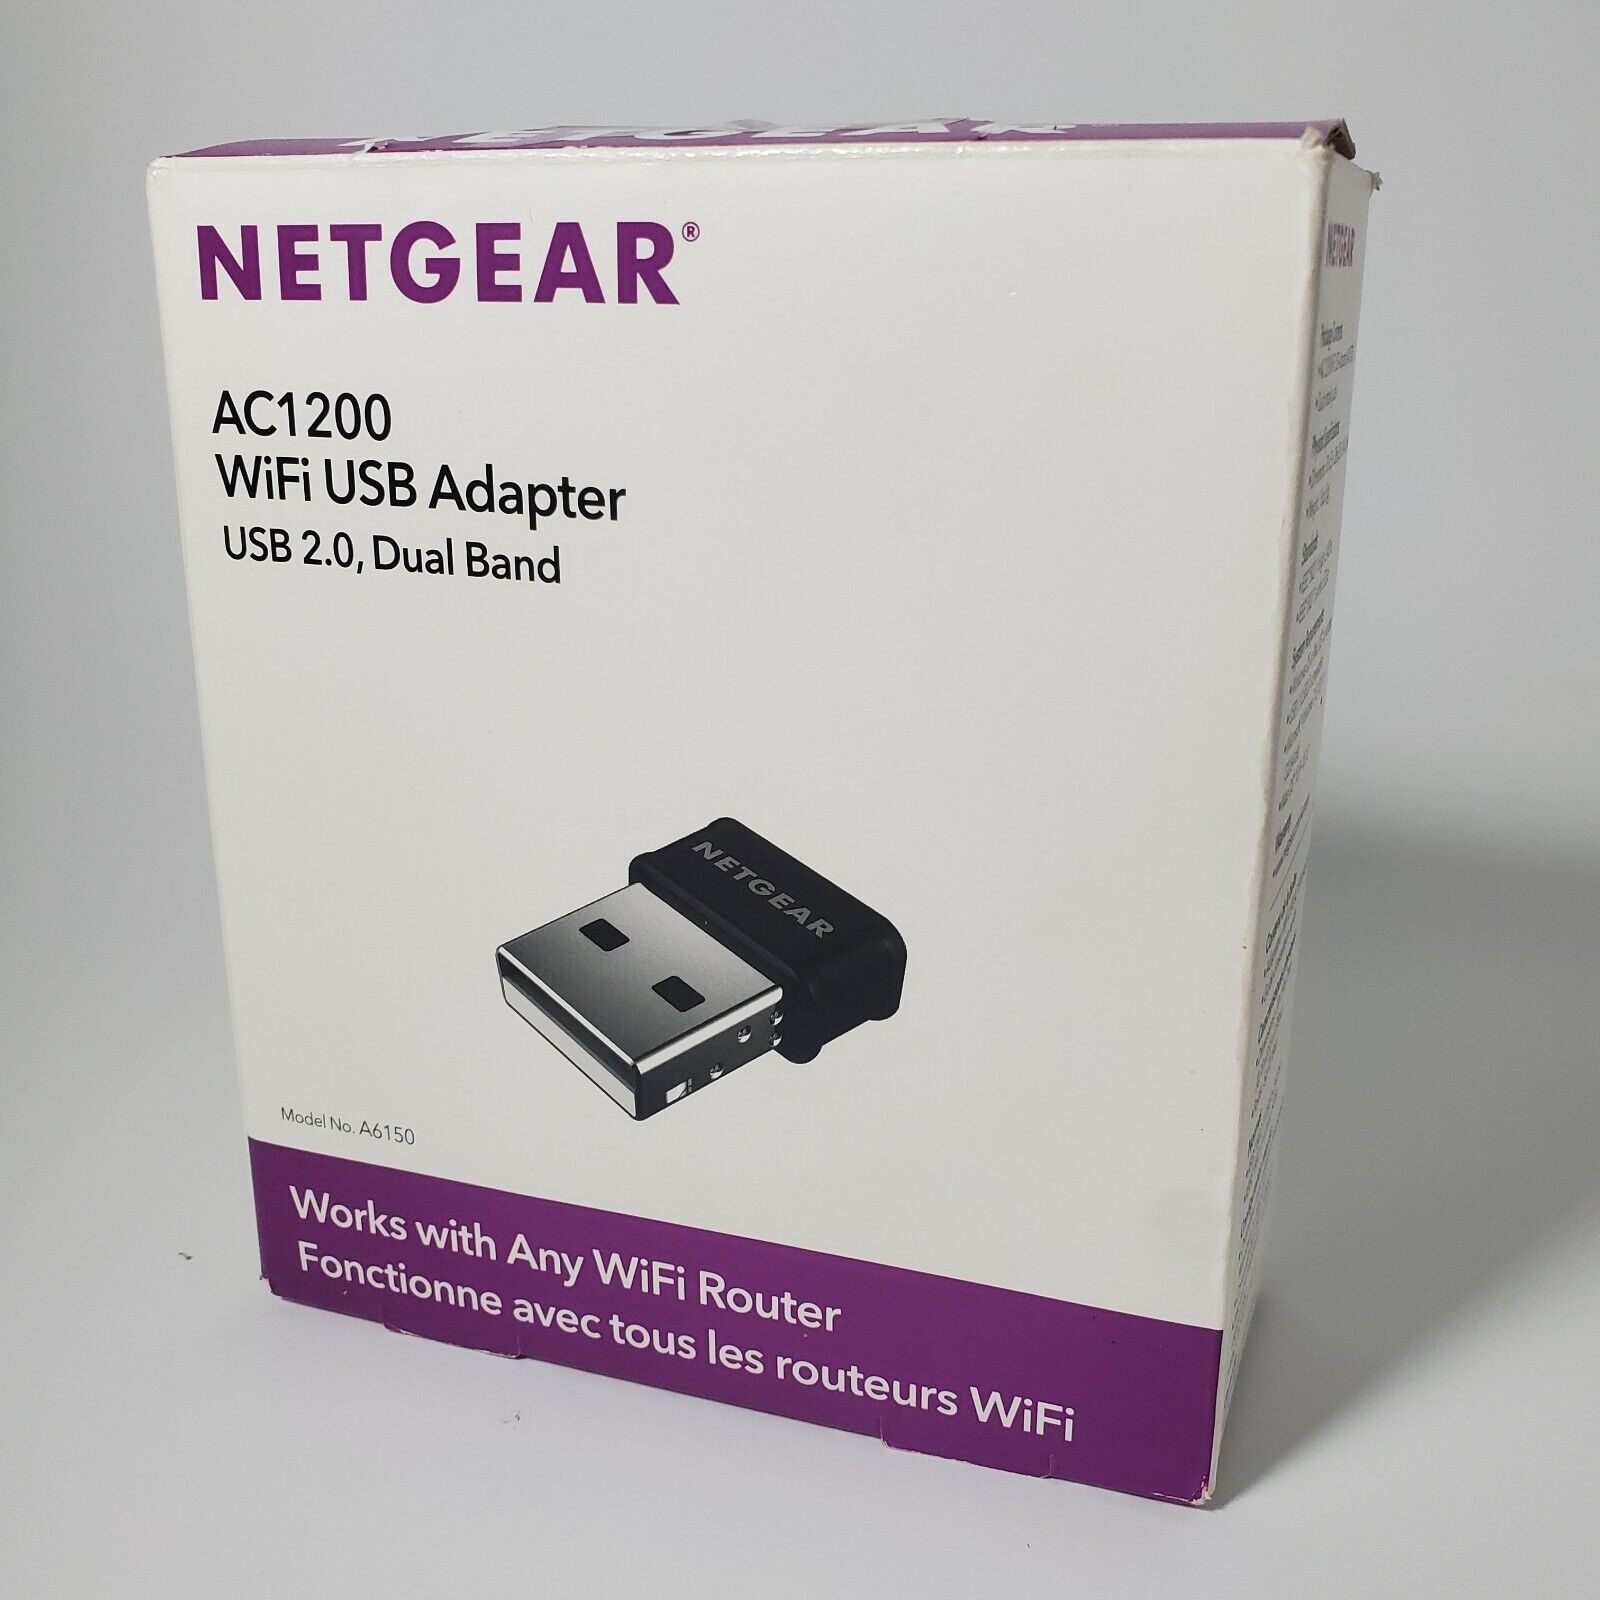 Netgear A6150-100PAS AC1200 Wifi USB 2.0 Dual Band Adapter A6150 *damaged box* 